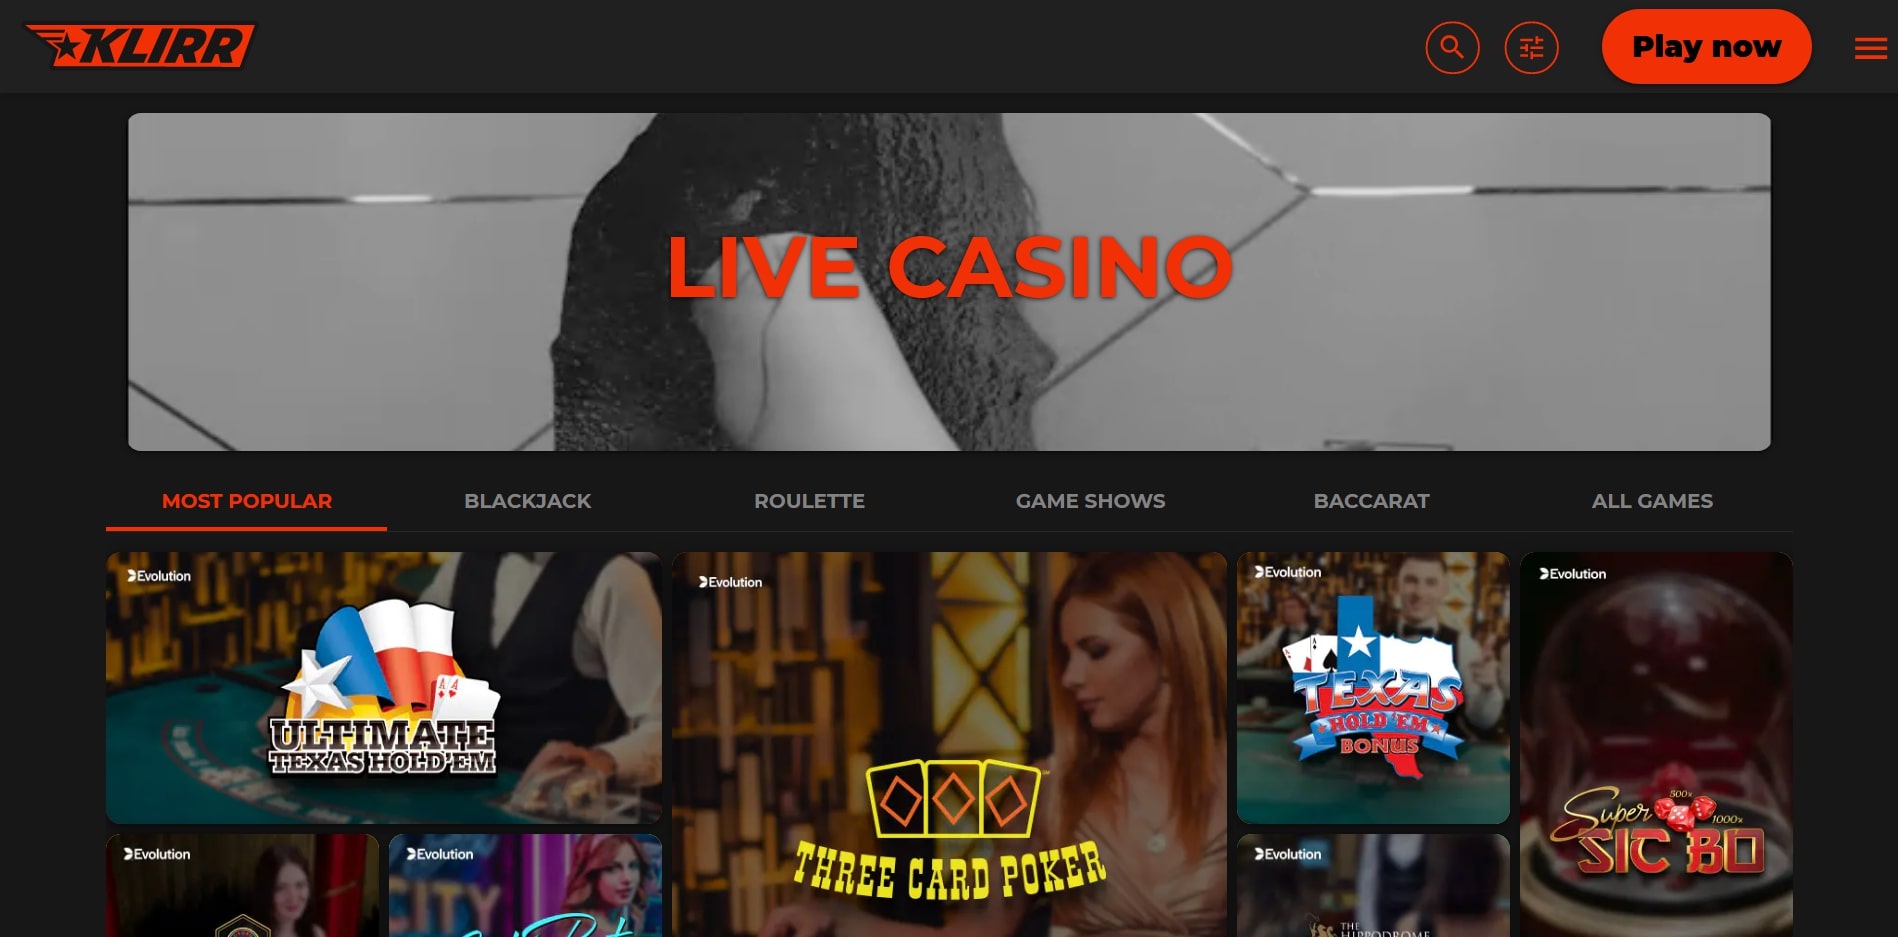 Klirr Casino Live Dealer Games